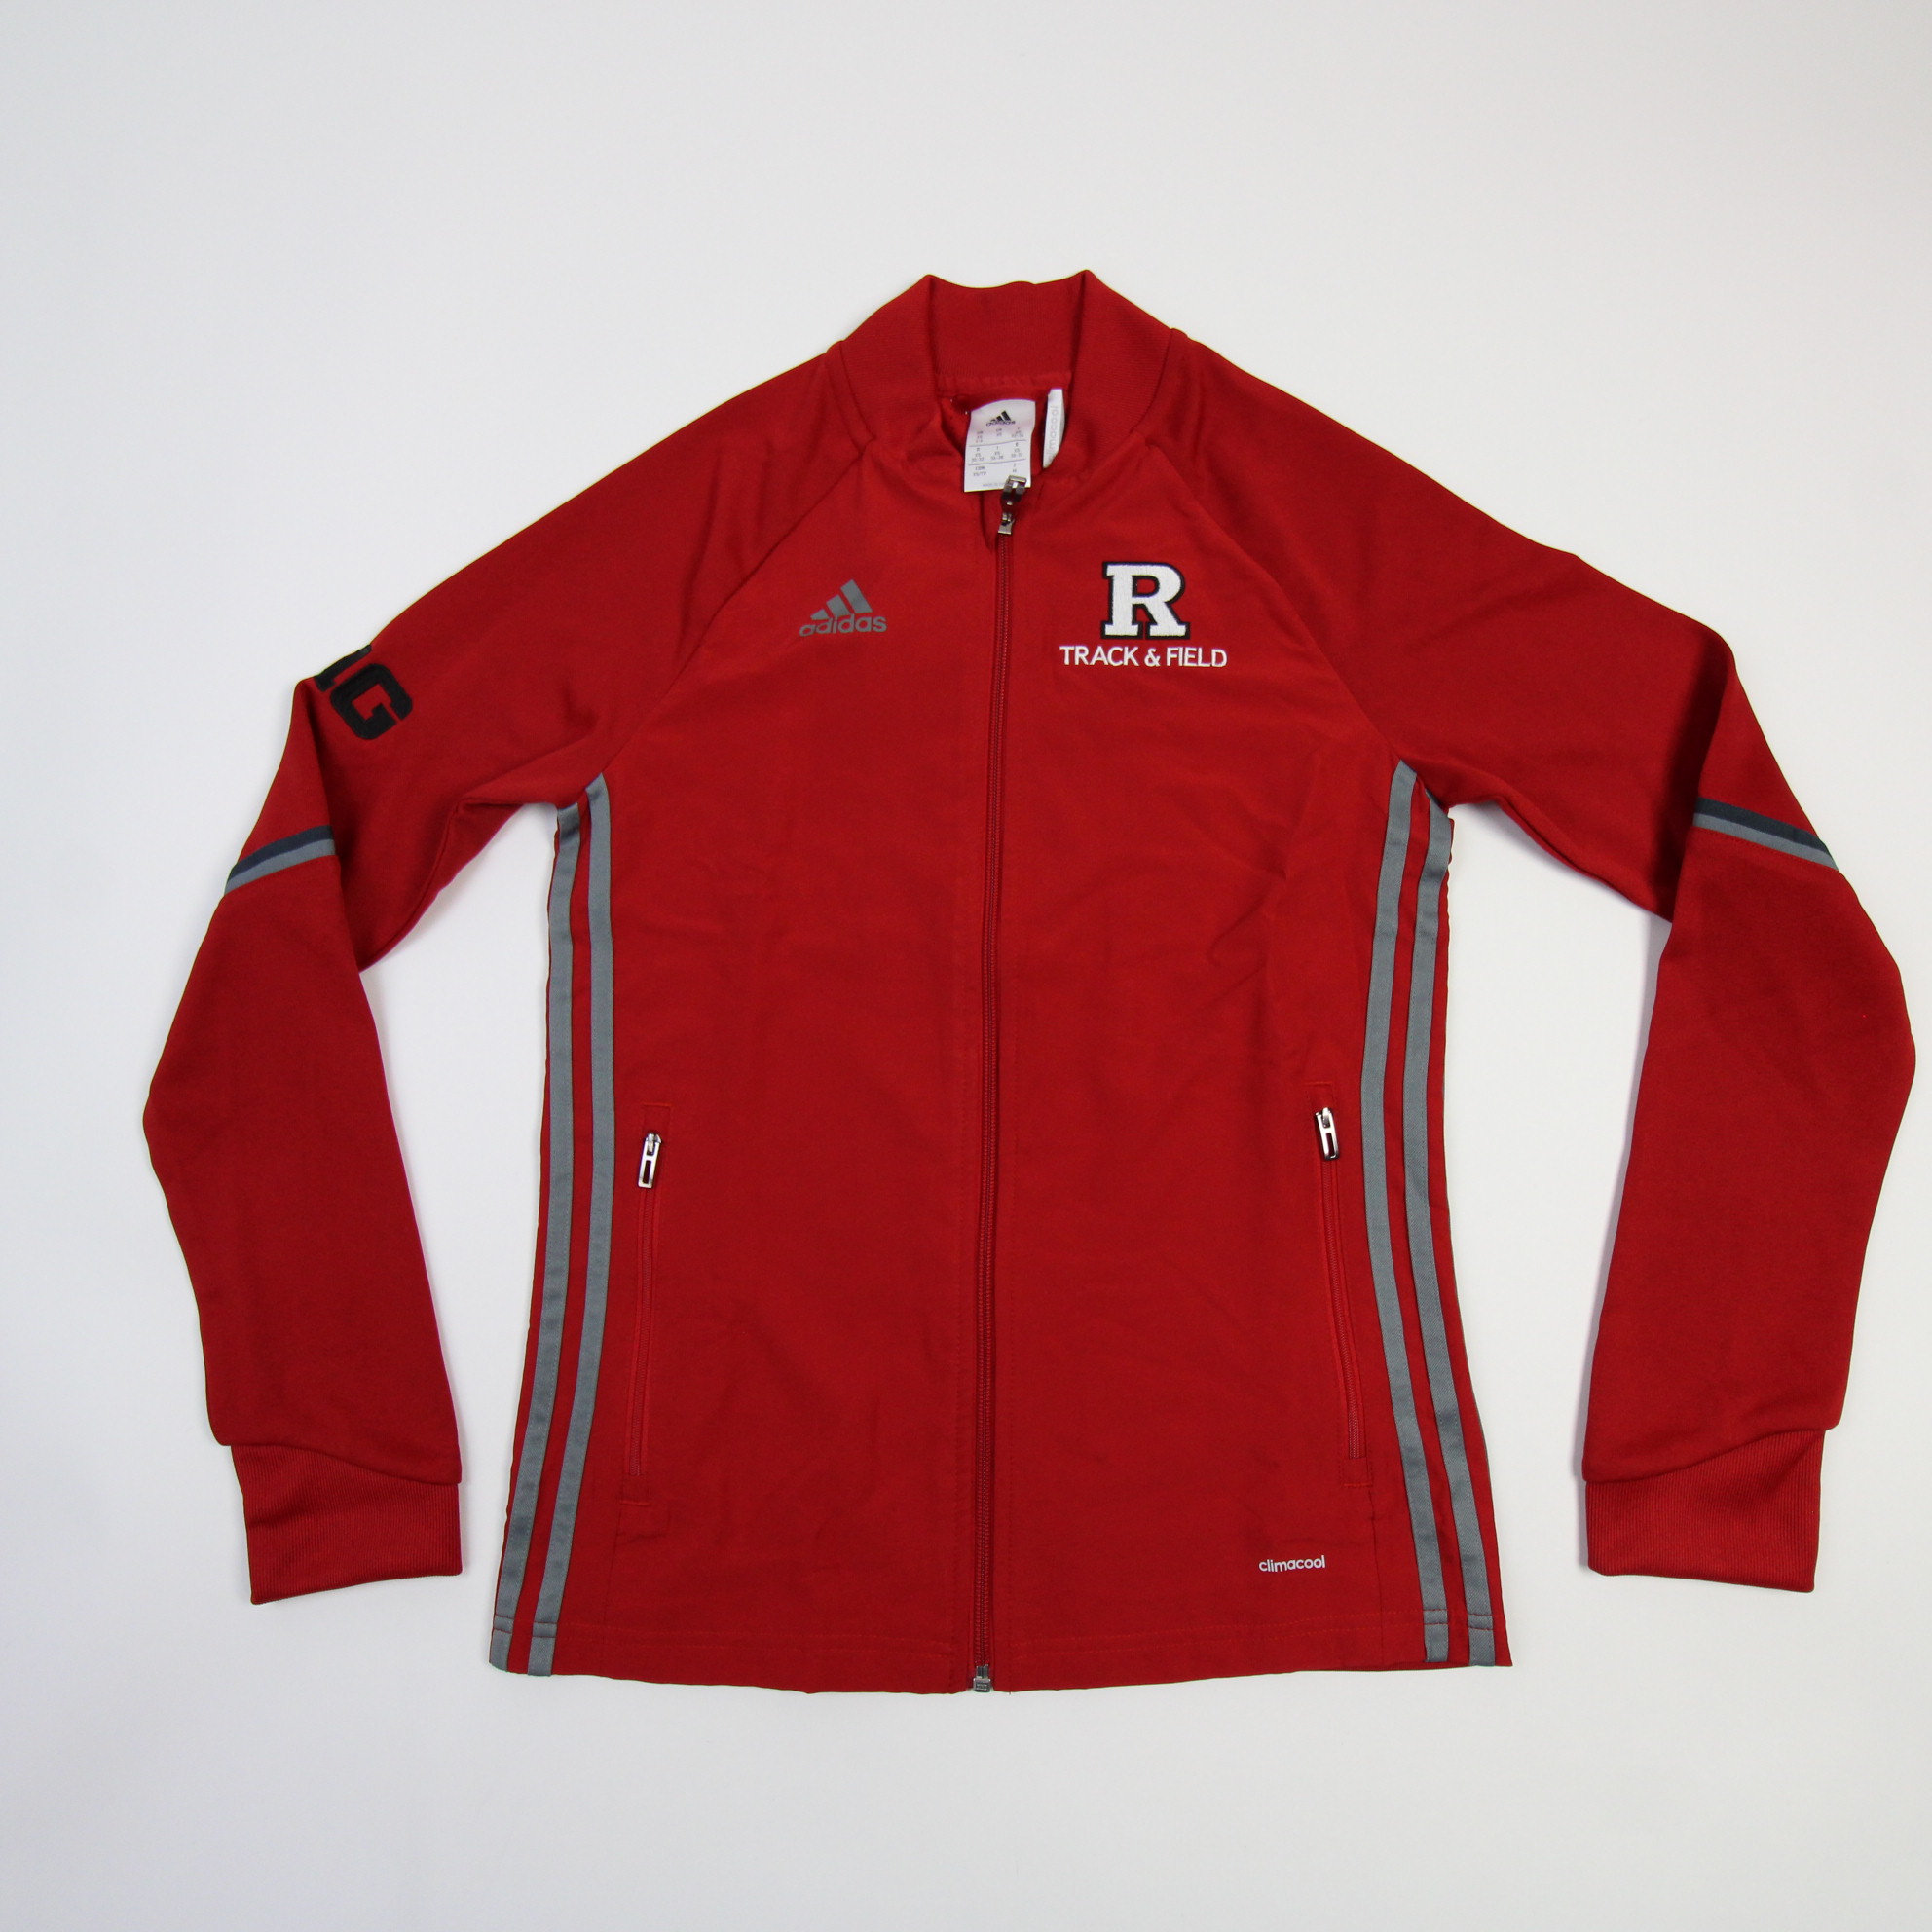 Rutgers Scarlet Knights Adidas Climacool para mujer Rojo Nuevo | eBay